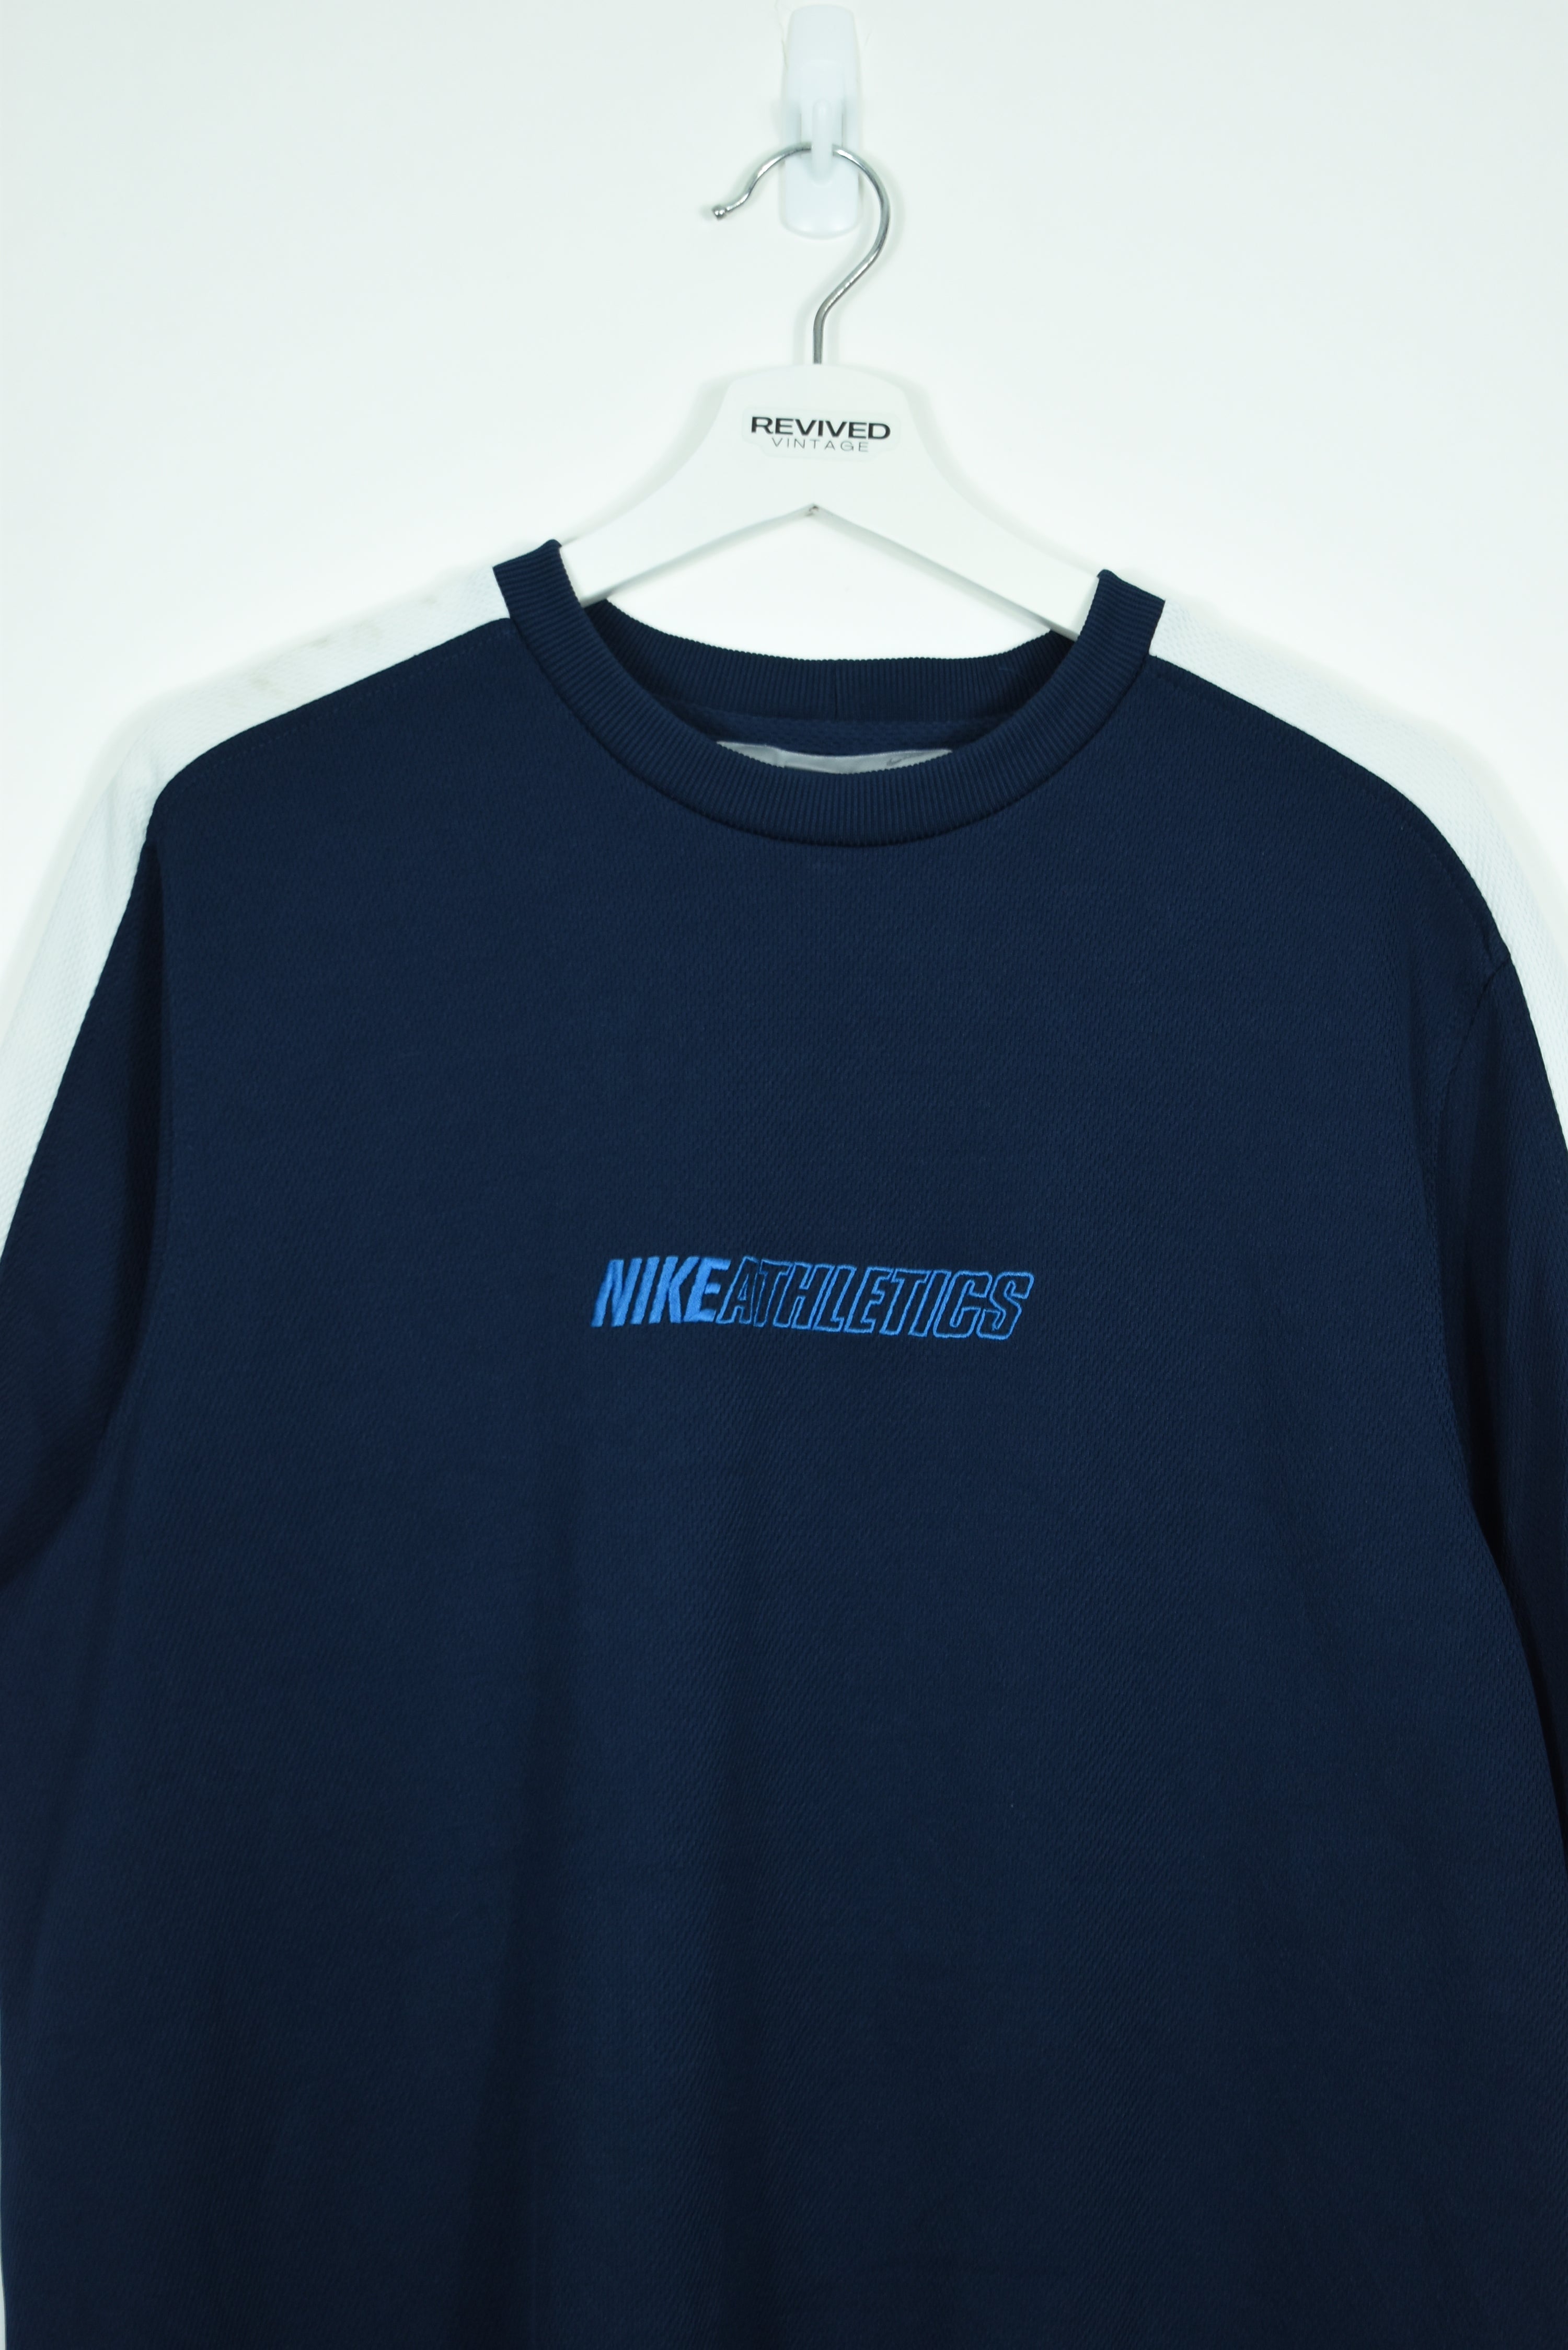 Vintage Nike Athletic Embroidery Mesh T Shirt Xlarge